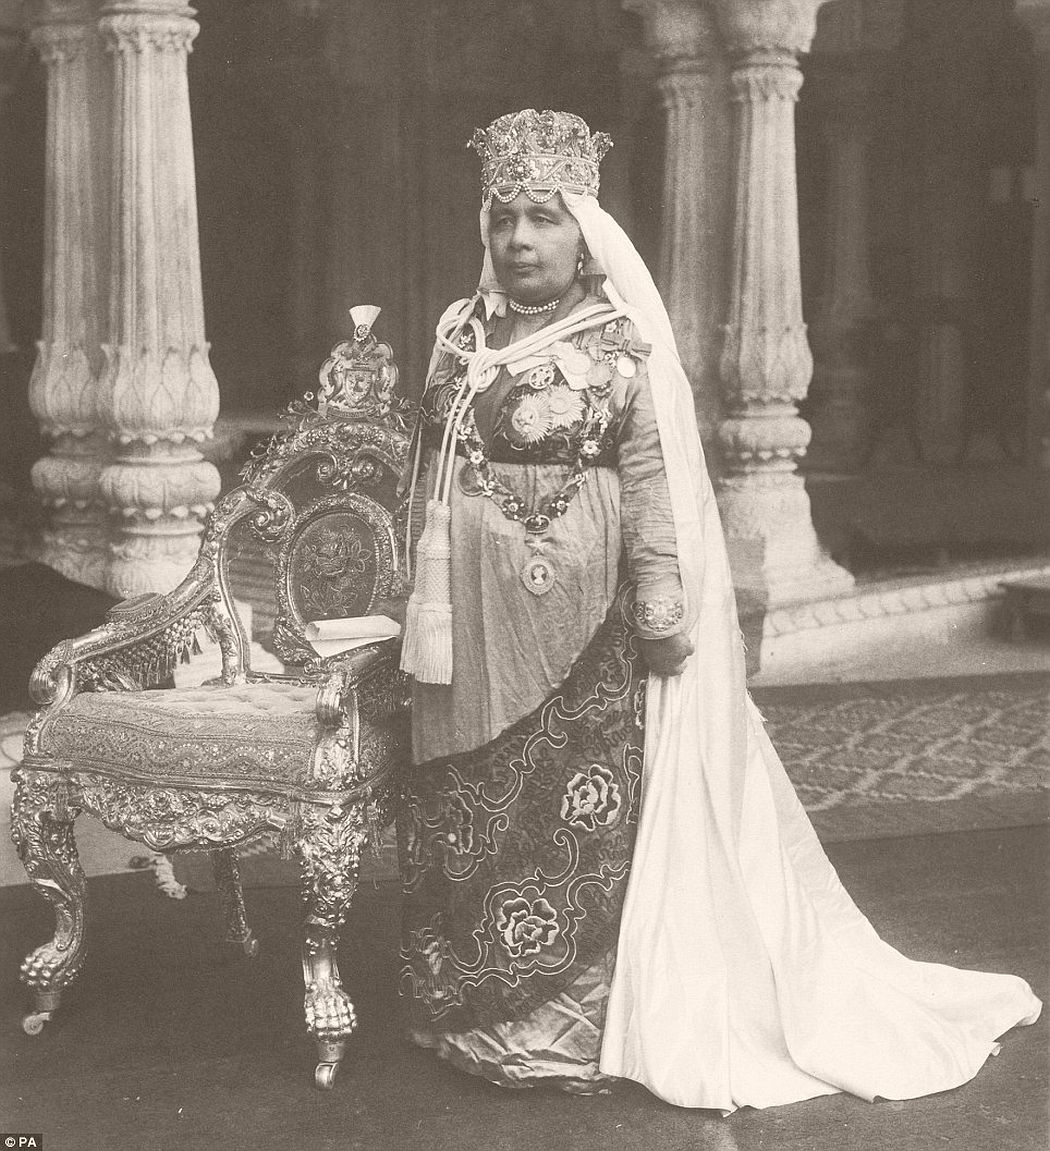 Nawab Sultan Kaikhusrau Jahan, Begum of Bhopal in 1922. She is seen here in full state dress in her palace in Bhopal, India.